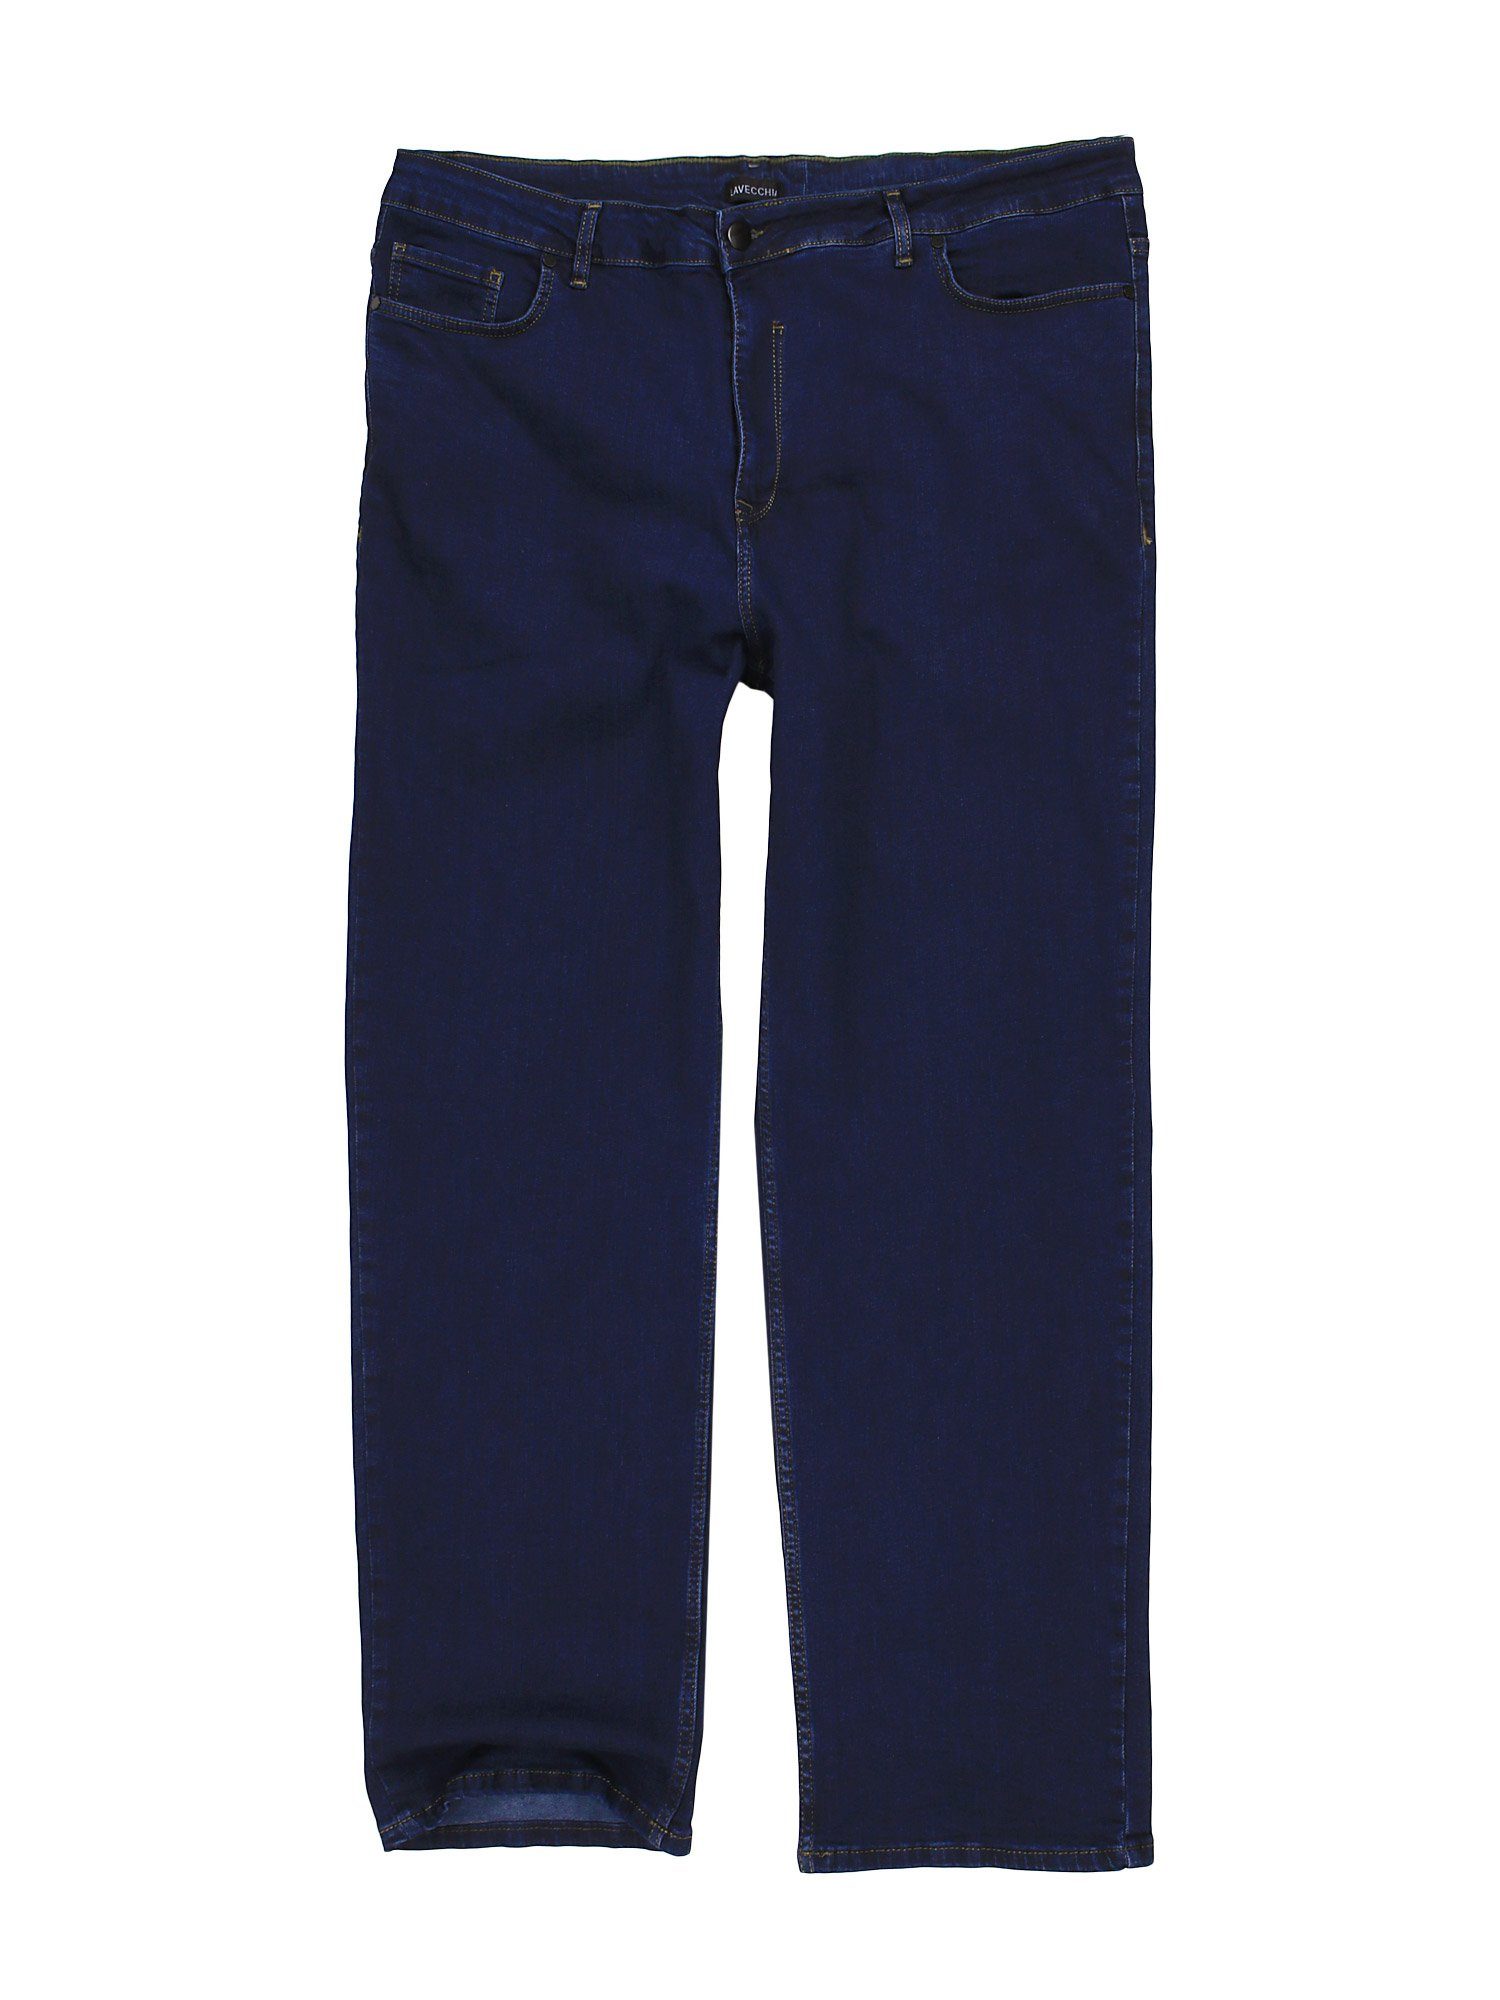 Lavecchia Comfort-fit-Jeans Übergrößen Herren Jeanshose LV-501 Stretch mit Elasthan dunkelblau